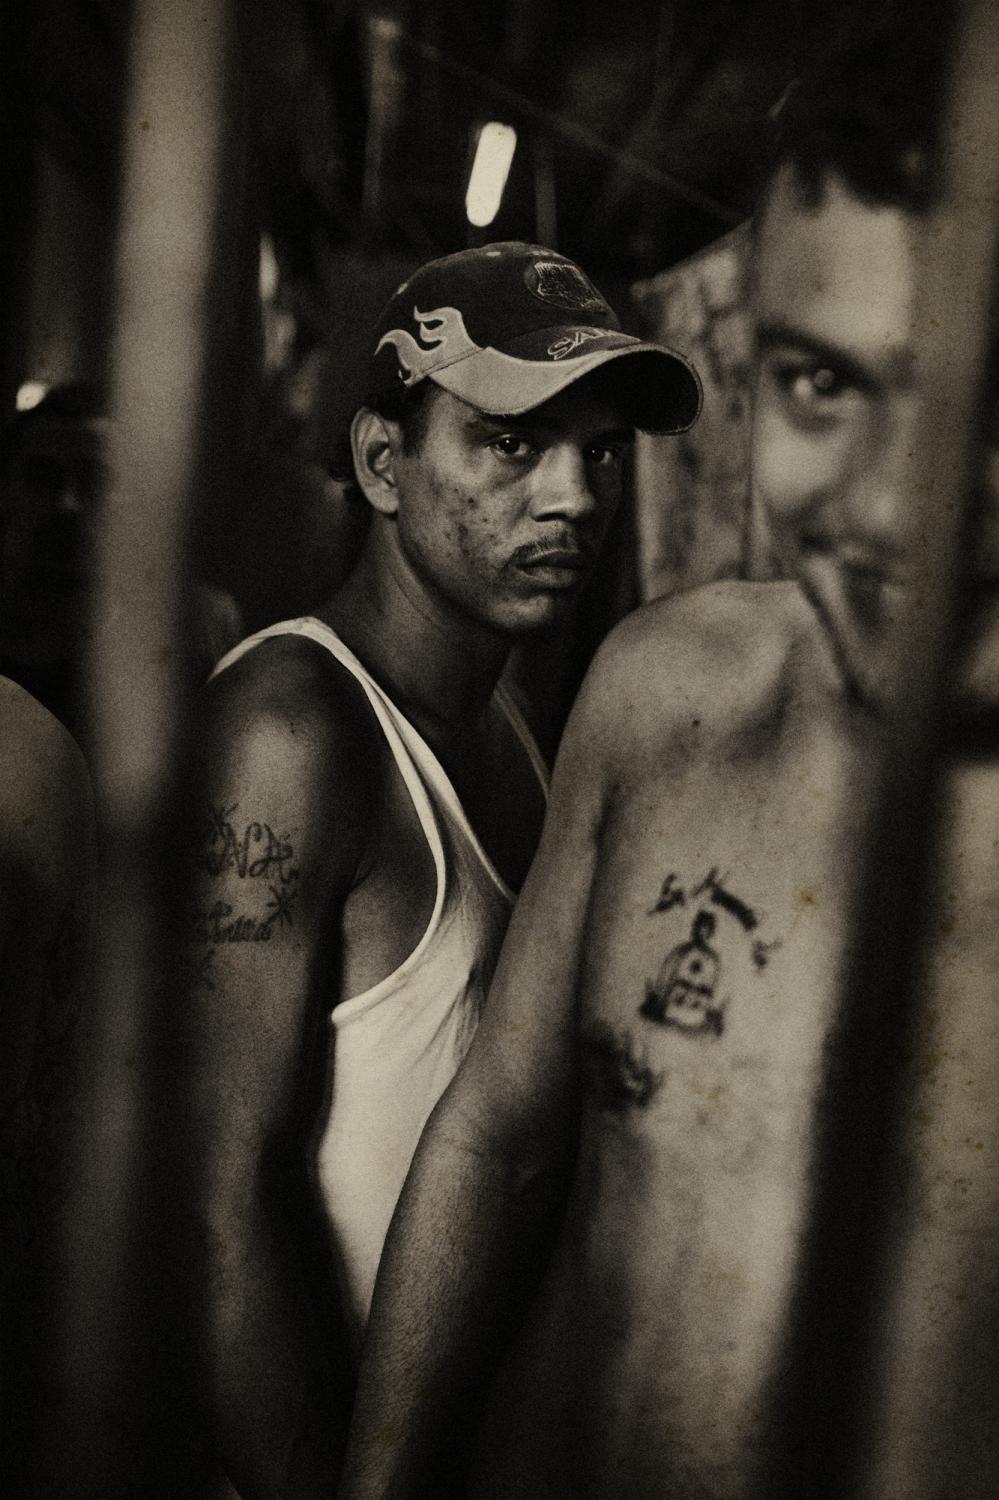 Honduras - Honduras.
February 2008.
Prisoners at San Pedro...